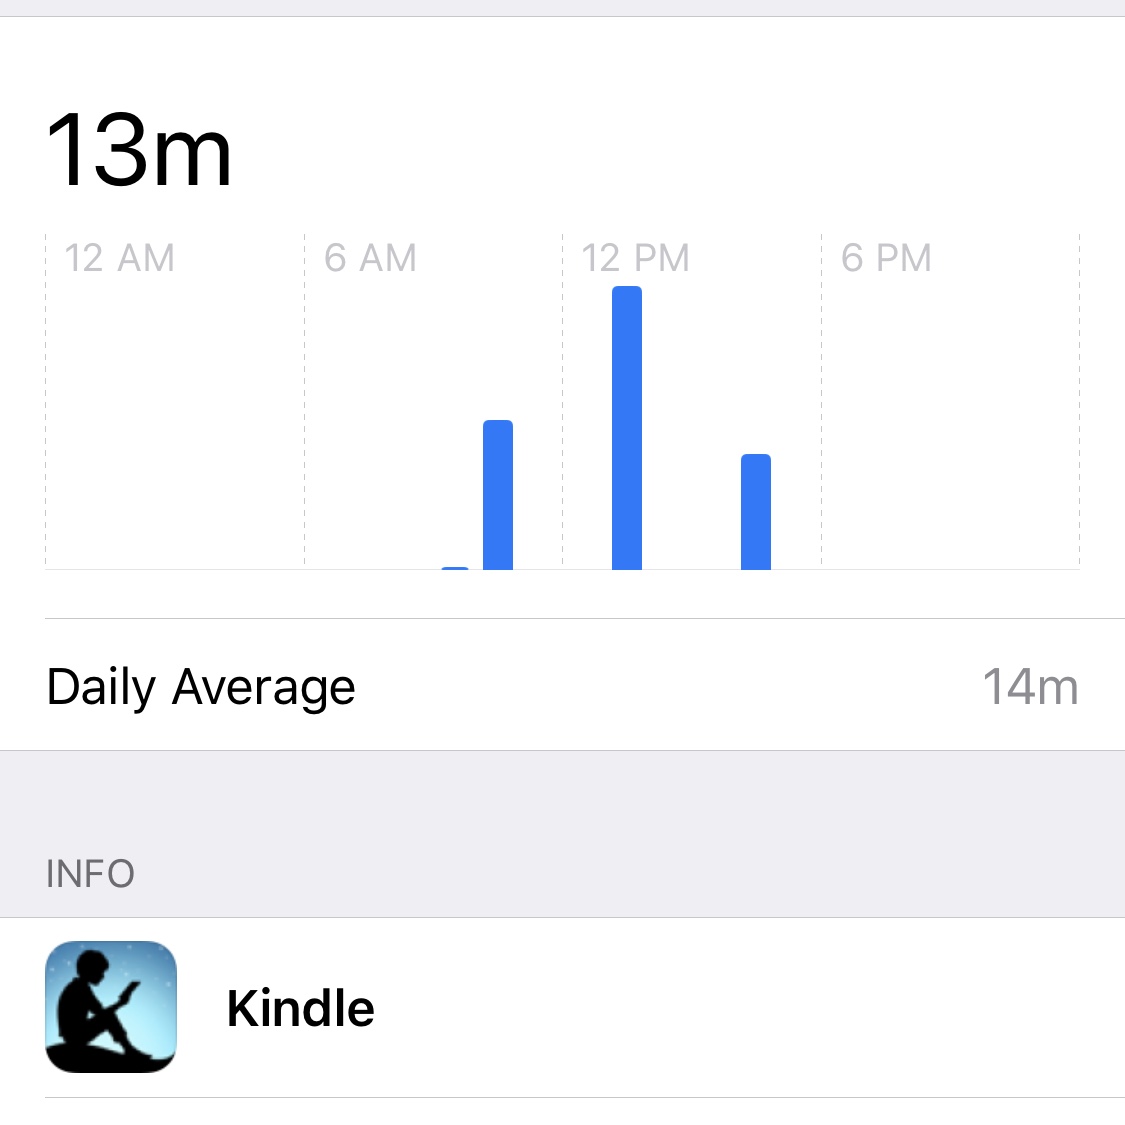 Daily Kindle Usage